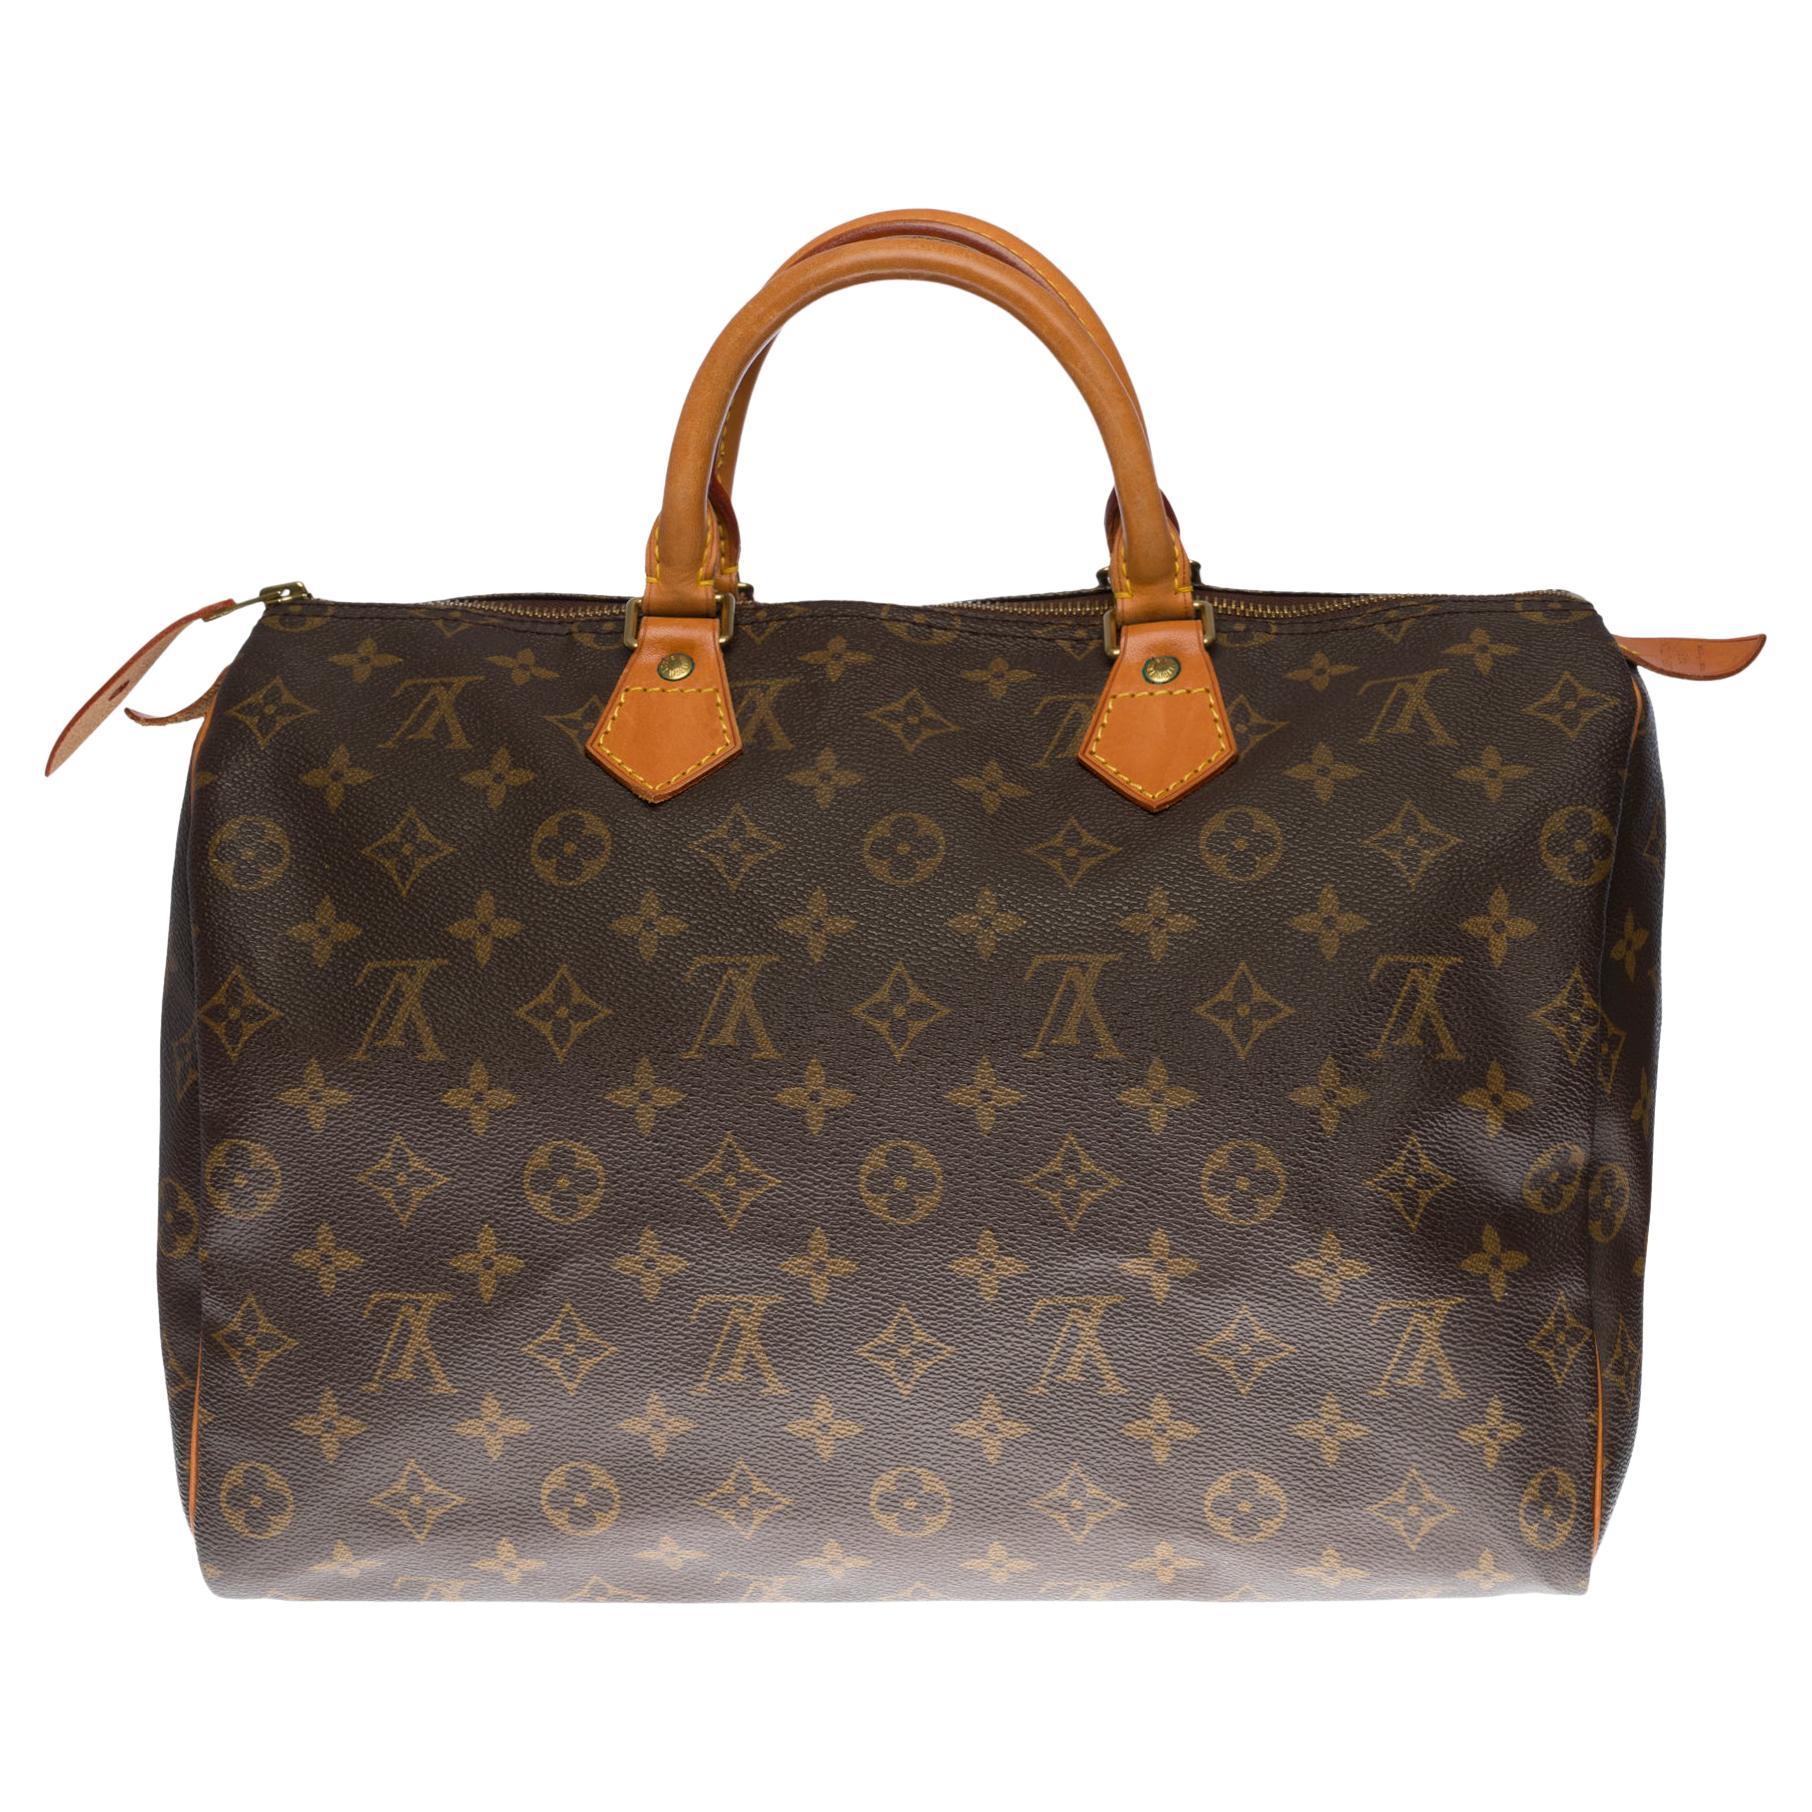 Louis Vuitton Speedy 35 handbag in brown canvas